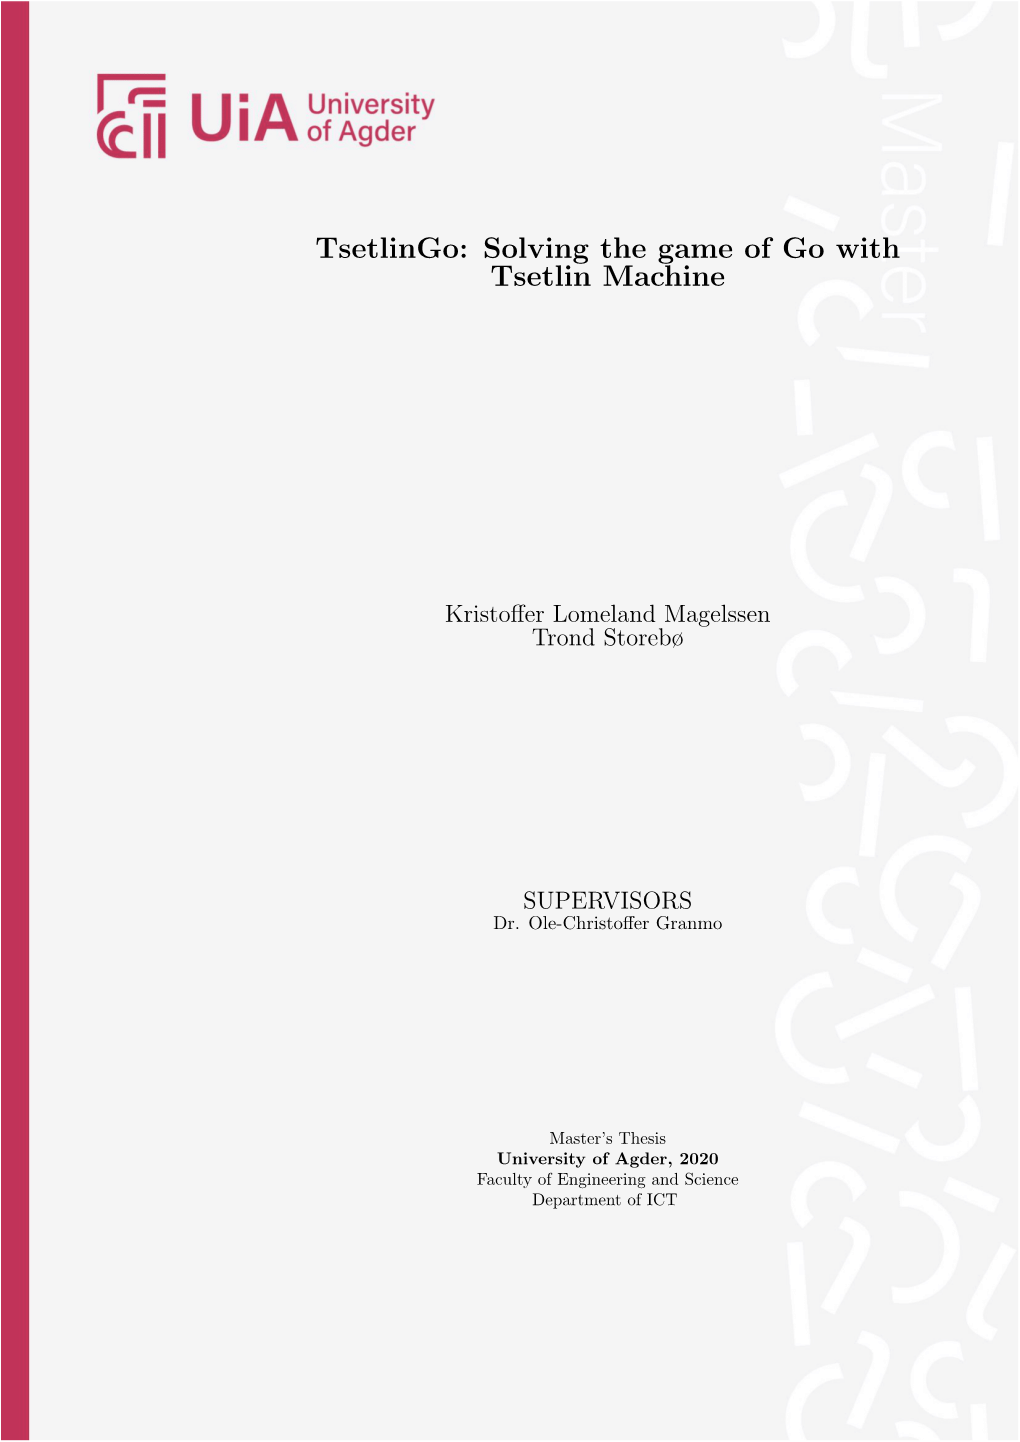 Tsetlingo: Solving the Game of Go with Tsetlin Machine